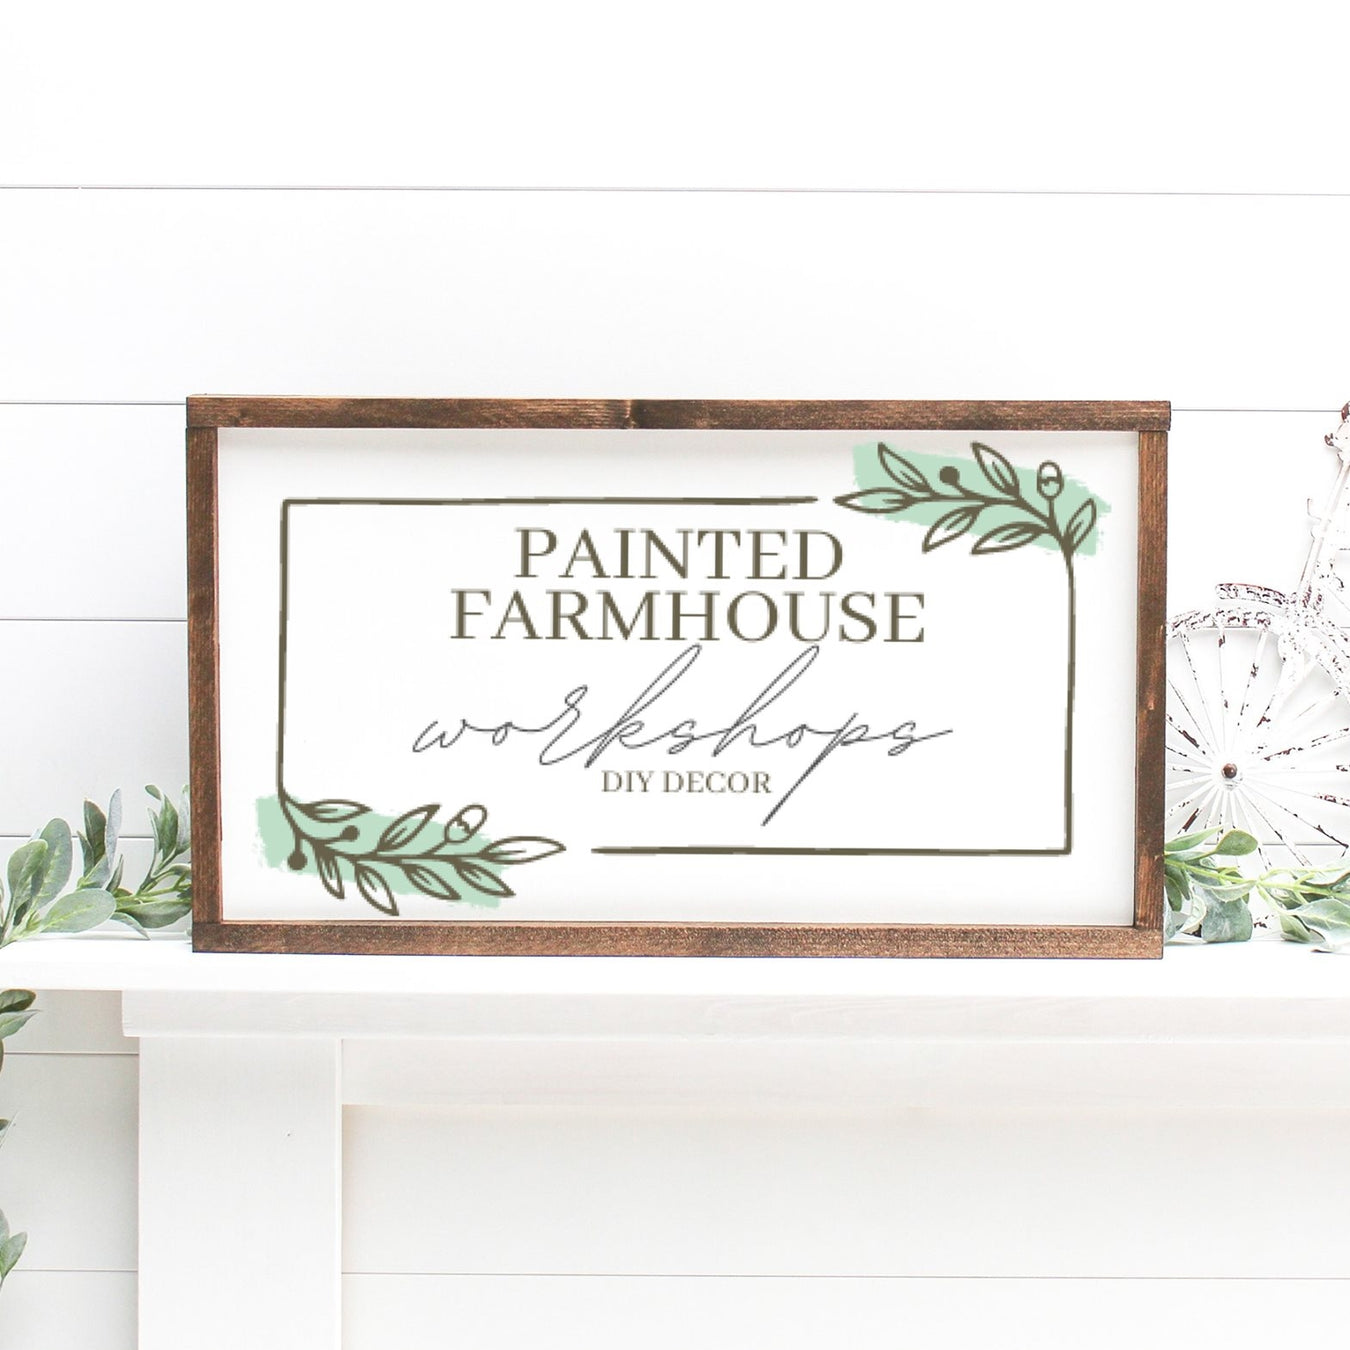 Painted Farmhouse Workshops